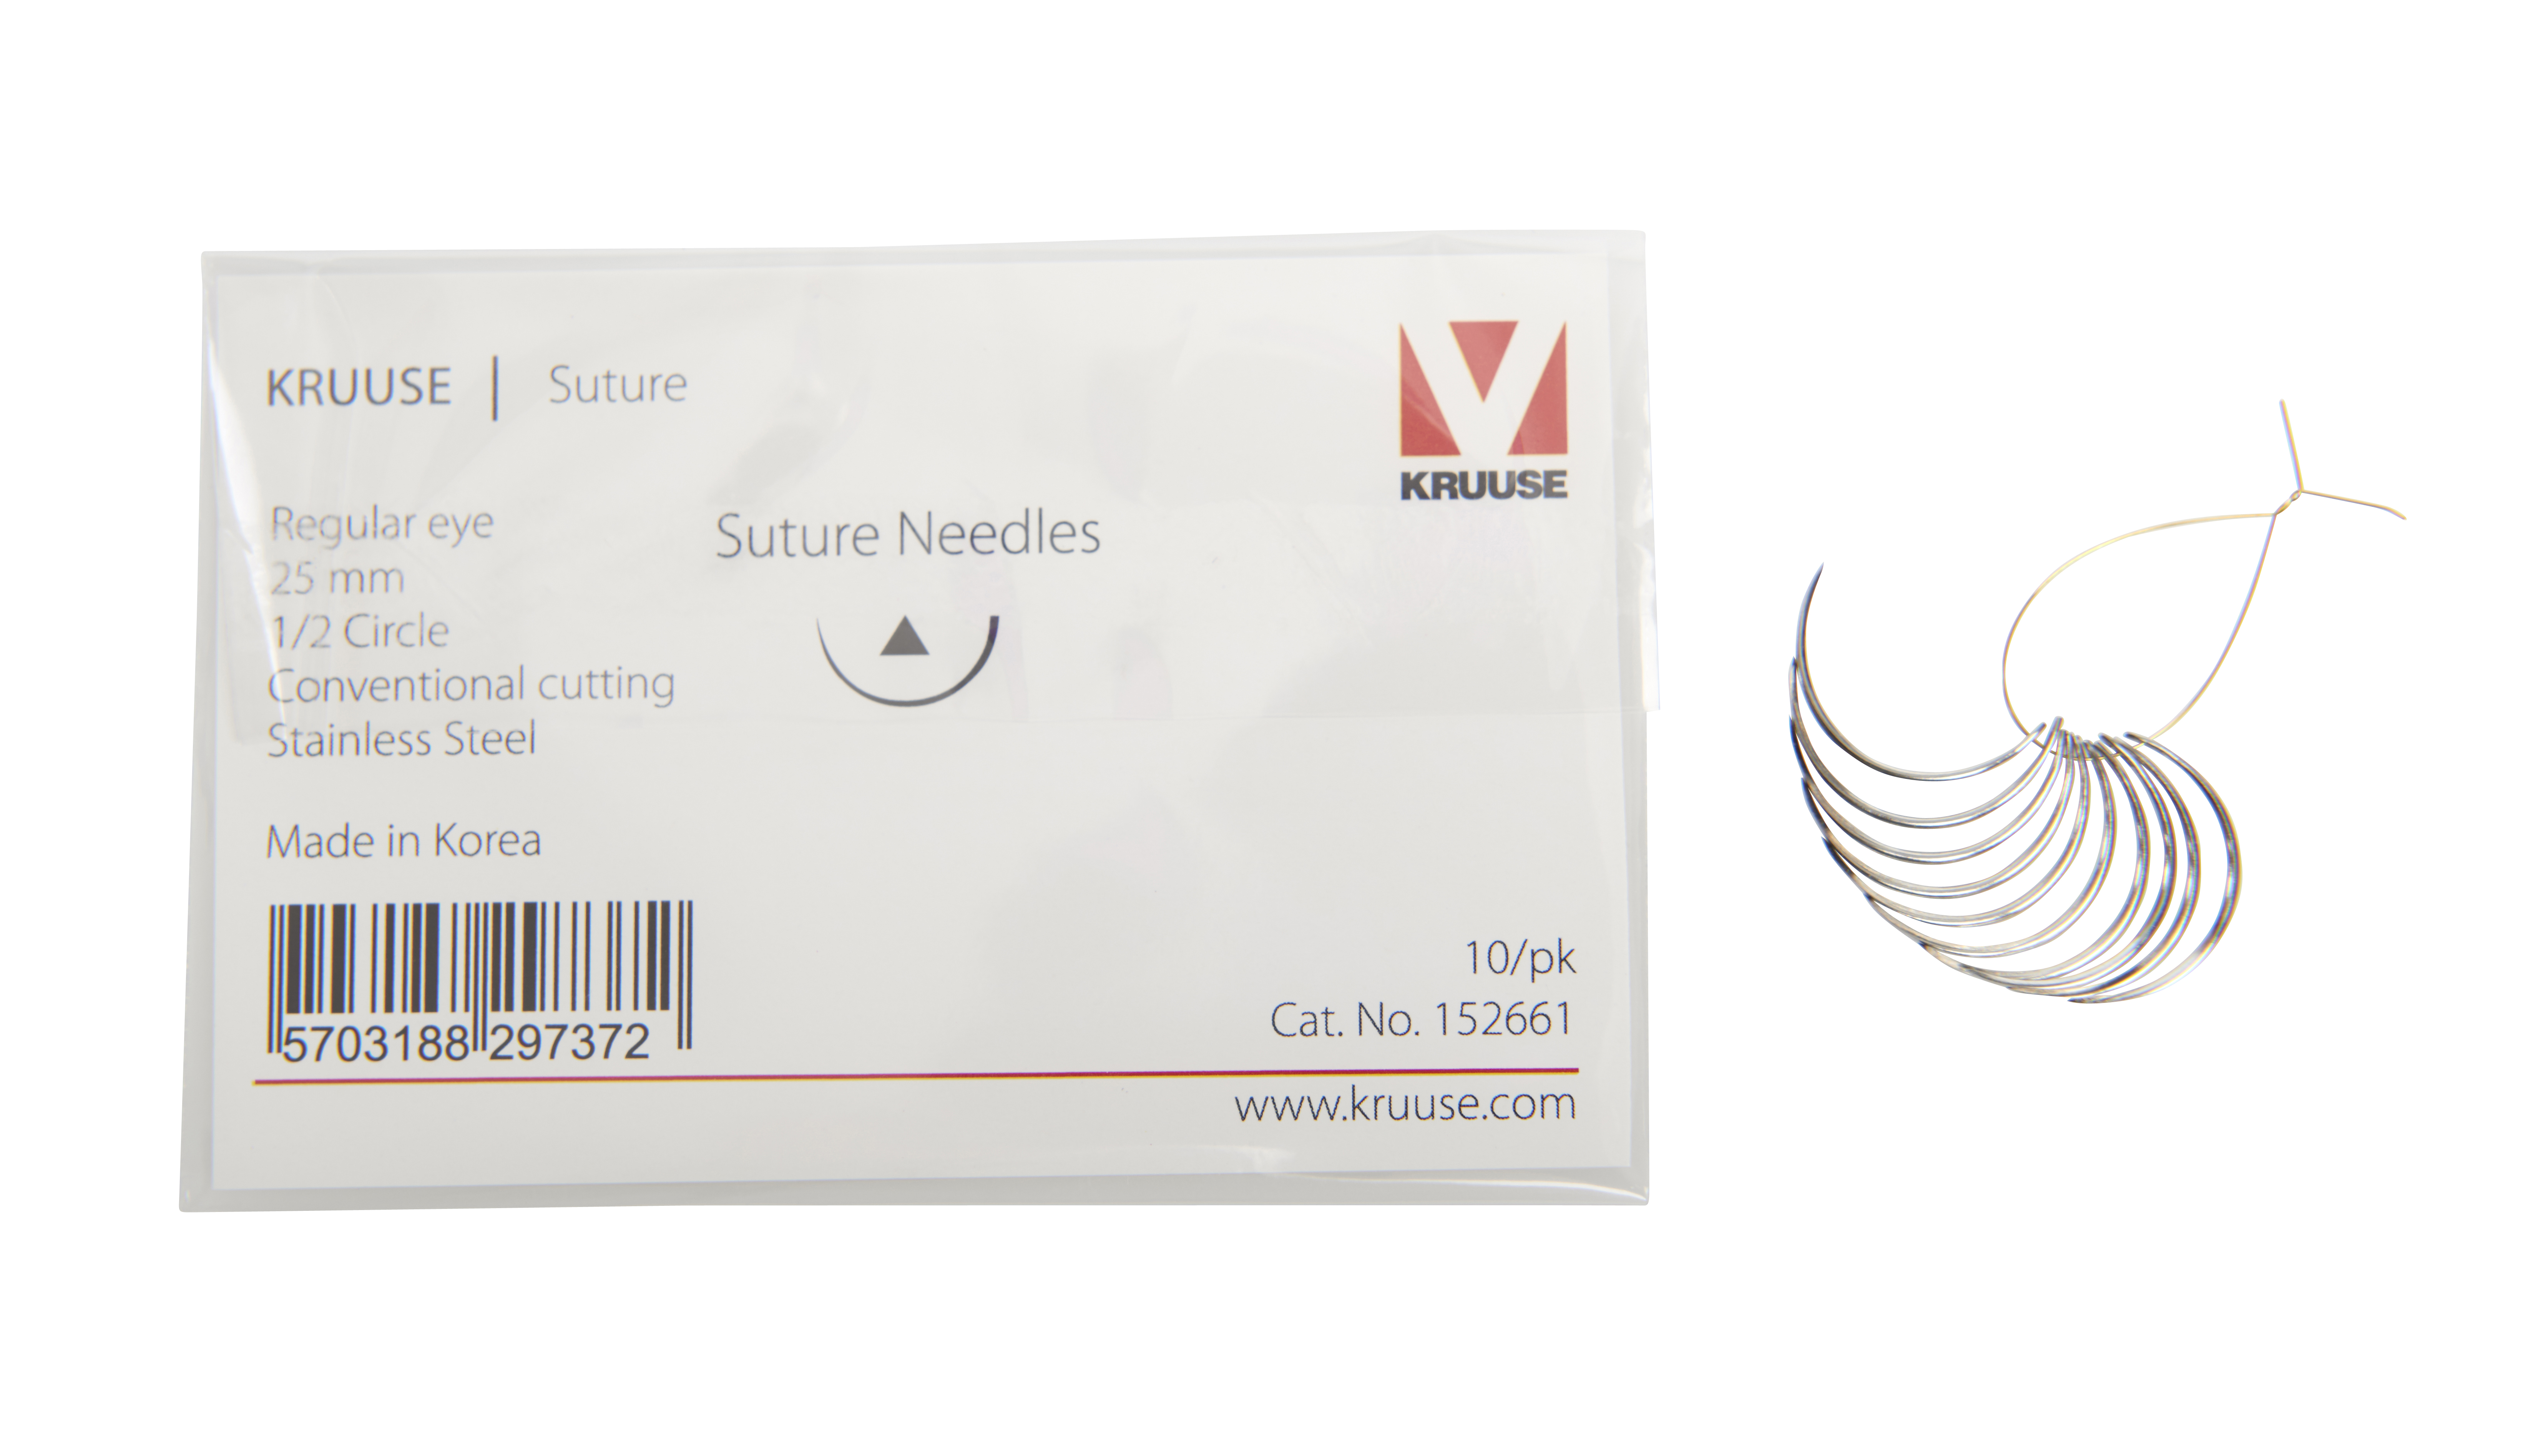 KRUUSE Suture Needle, regular eye, conventional cutting, 25 mm, 10/pk